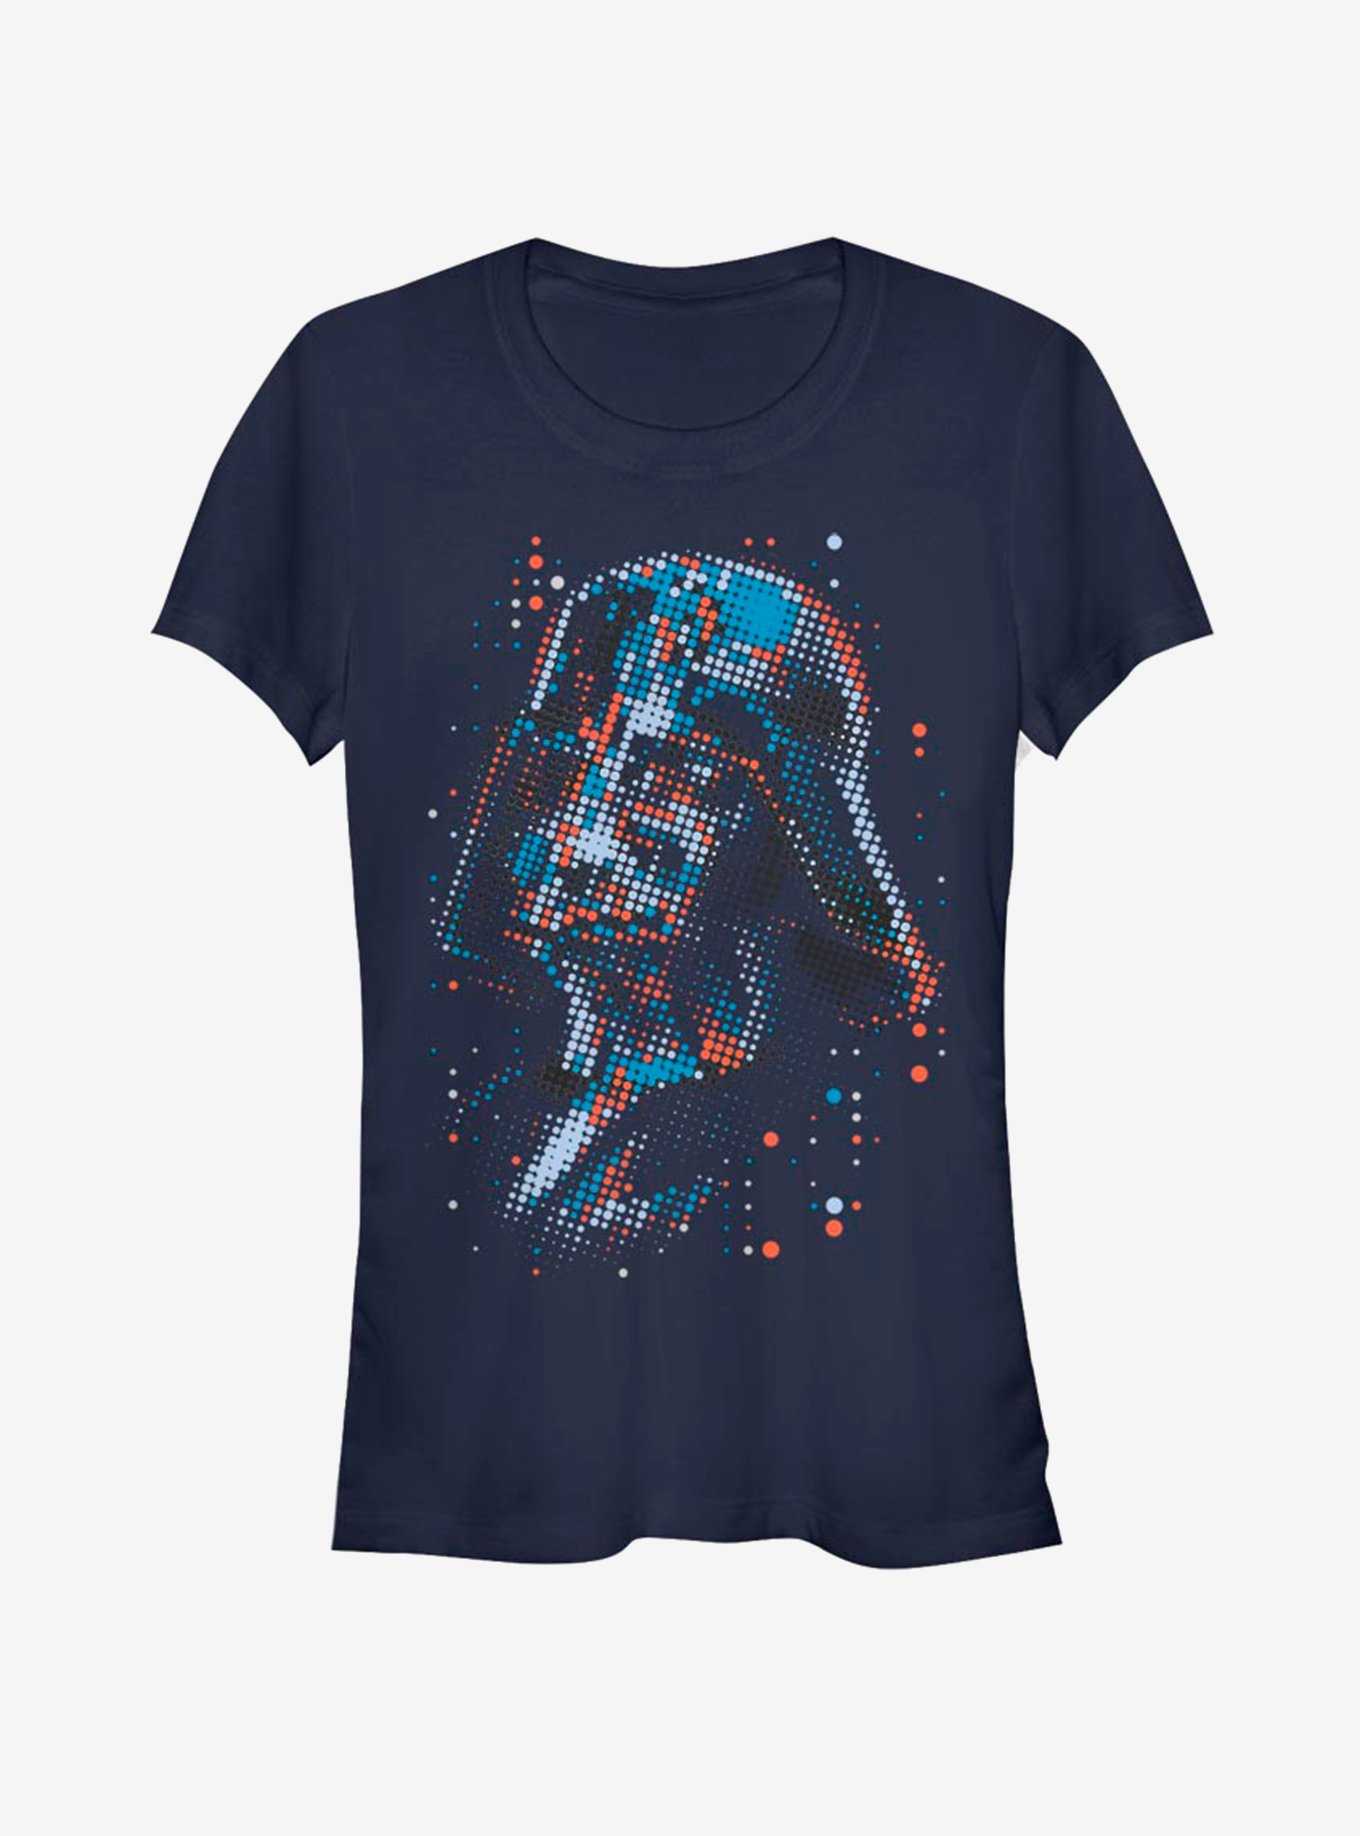 Star Wars Poster Girls T-Shirt, , hi-res